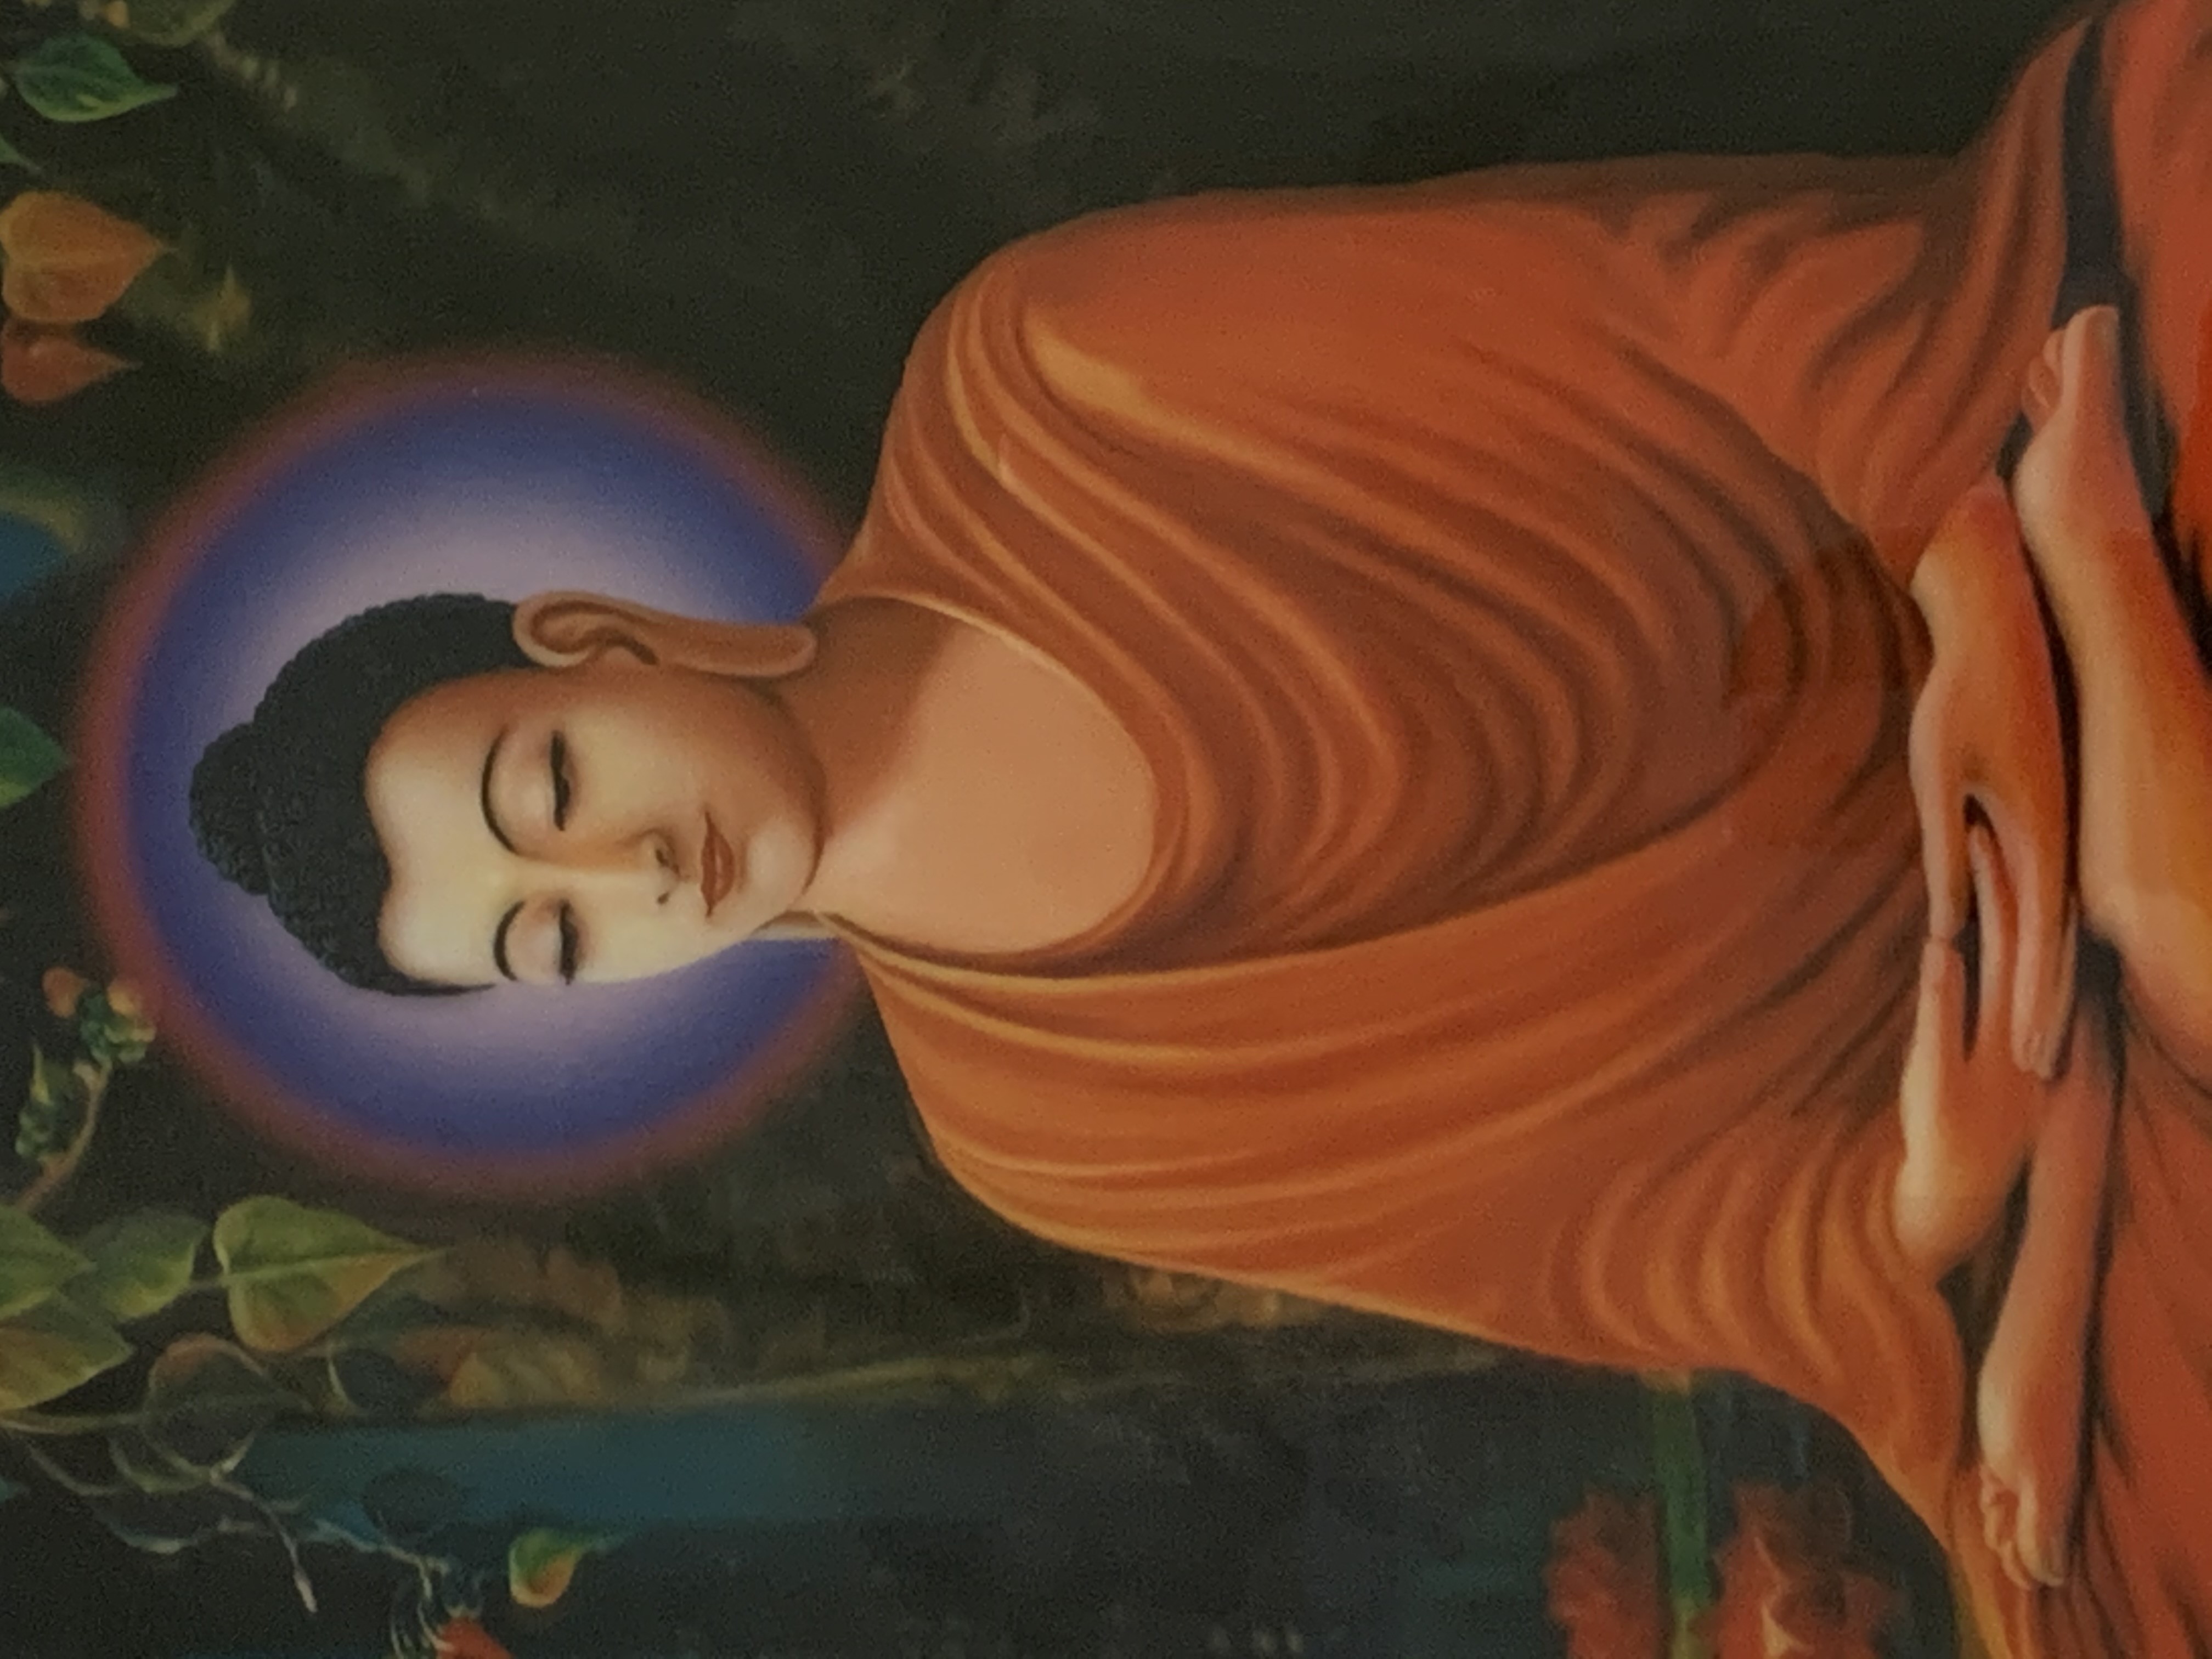 America Burma Buddhist Association